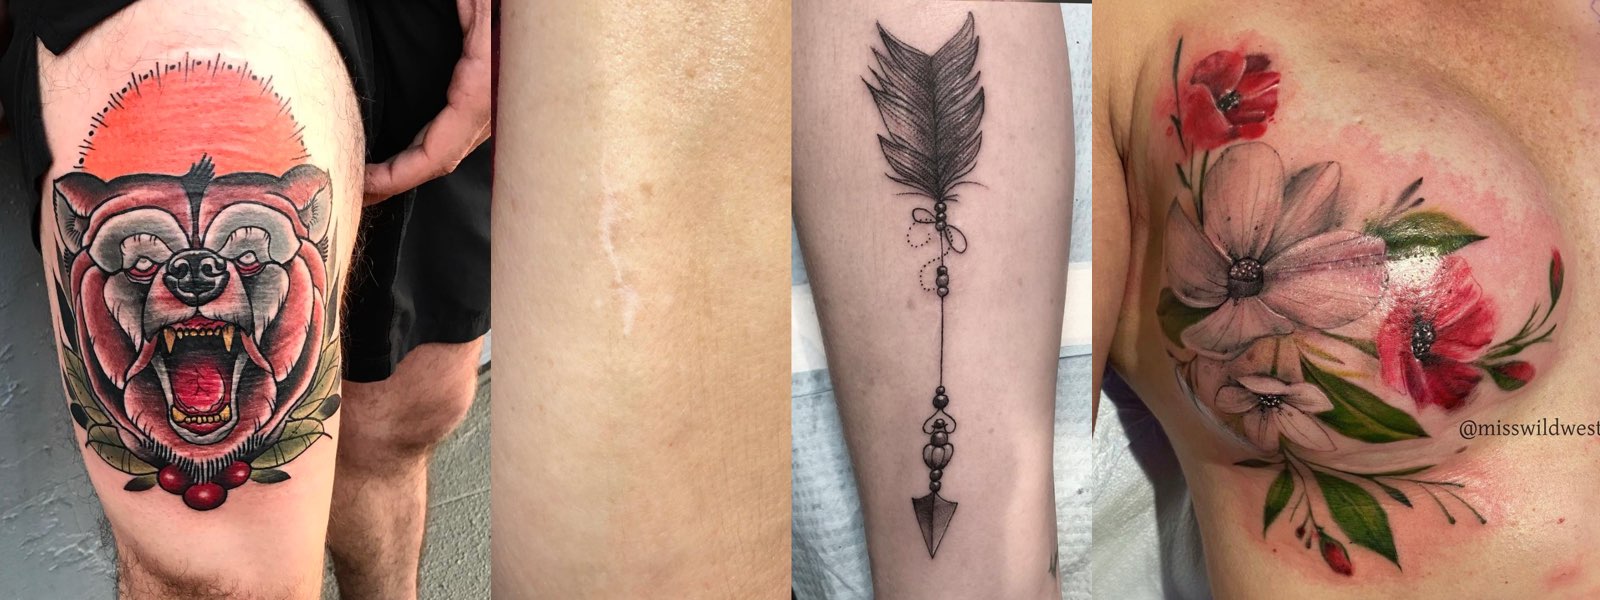 Kentucky Scar Tattoo Ban: A Wild Ride - Tattooing 101